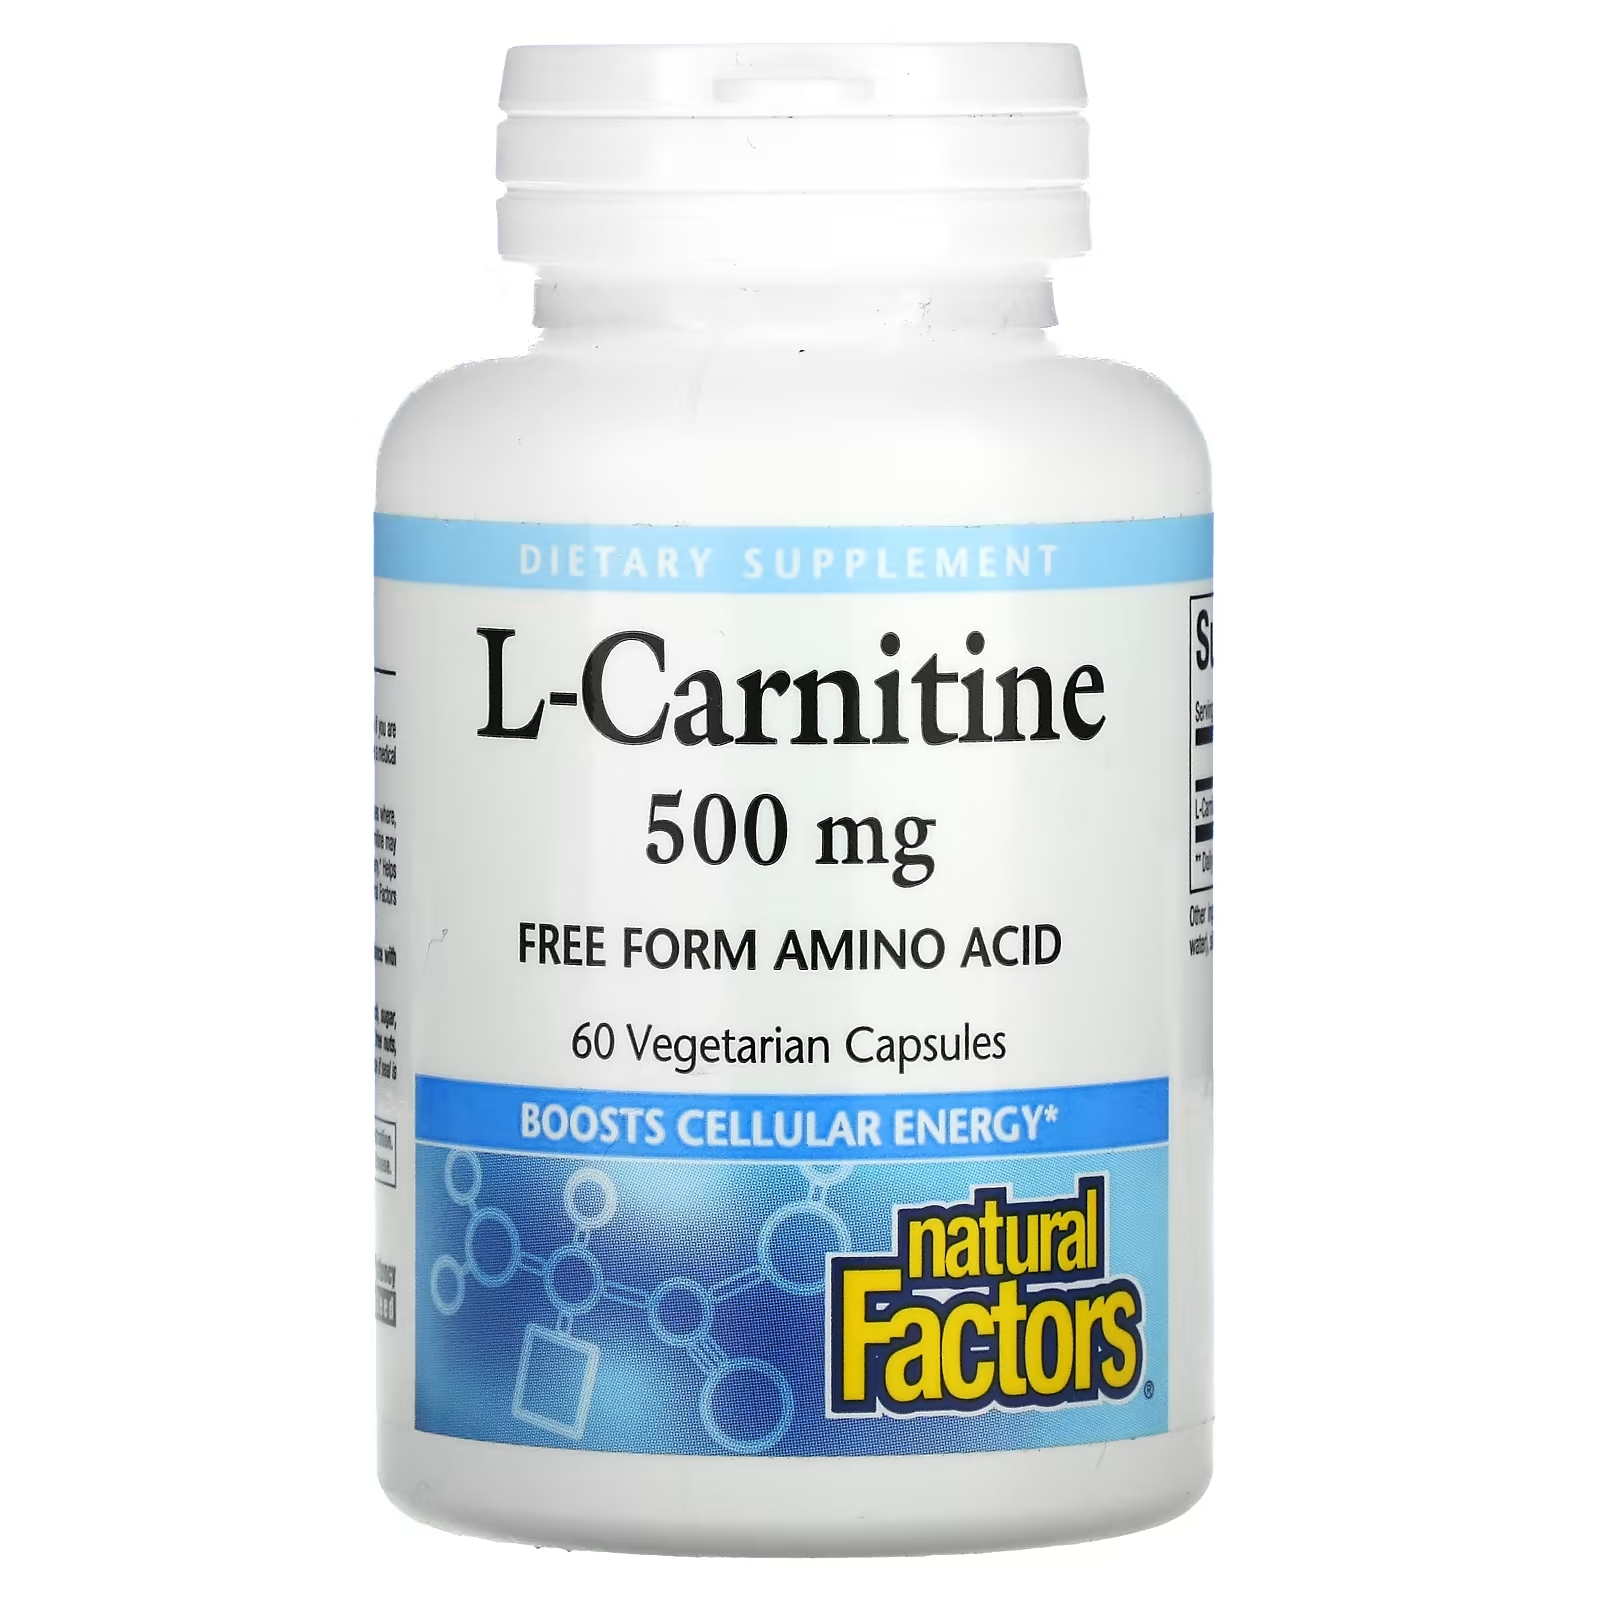 Natural Factors L-карнитин 500 мг, 60 вегетарианских капсул берберин wellbetx 500 мг 60 вегетарианских капсул natural factors